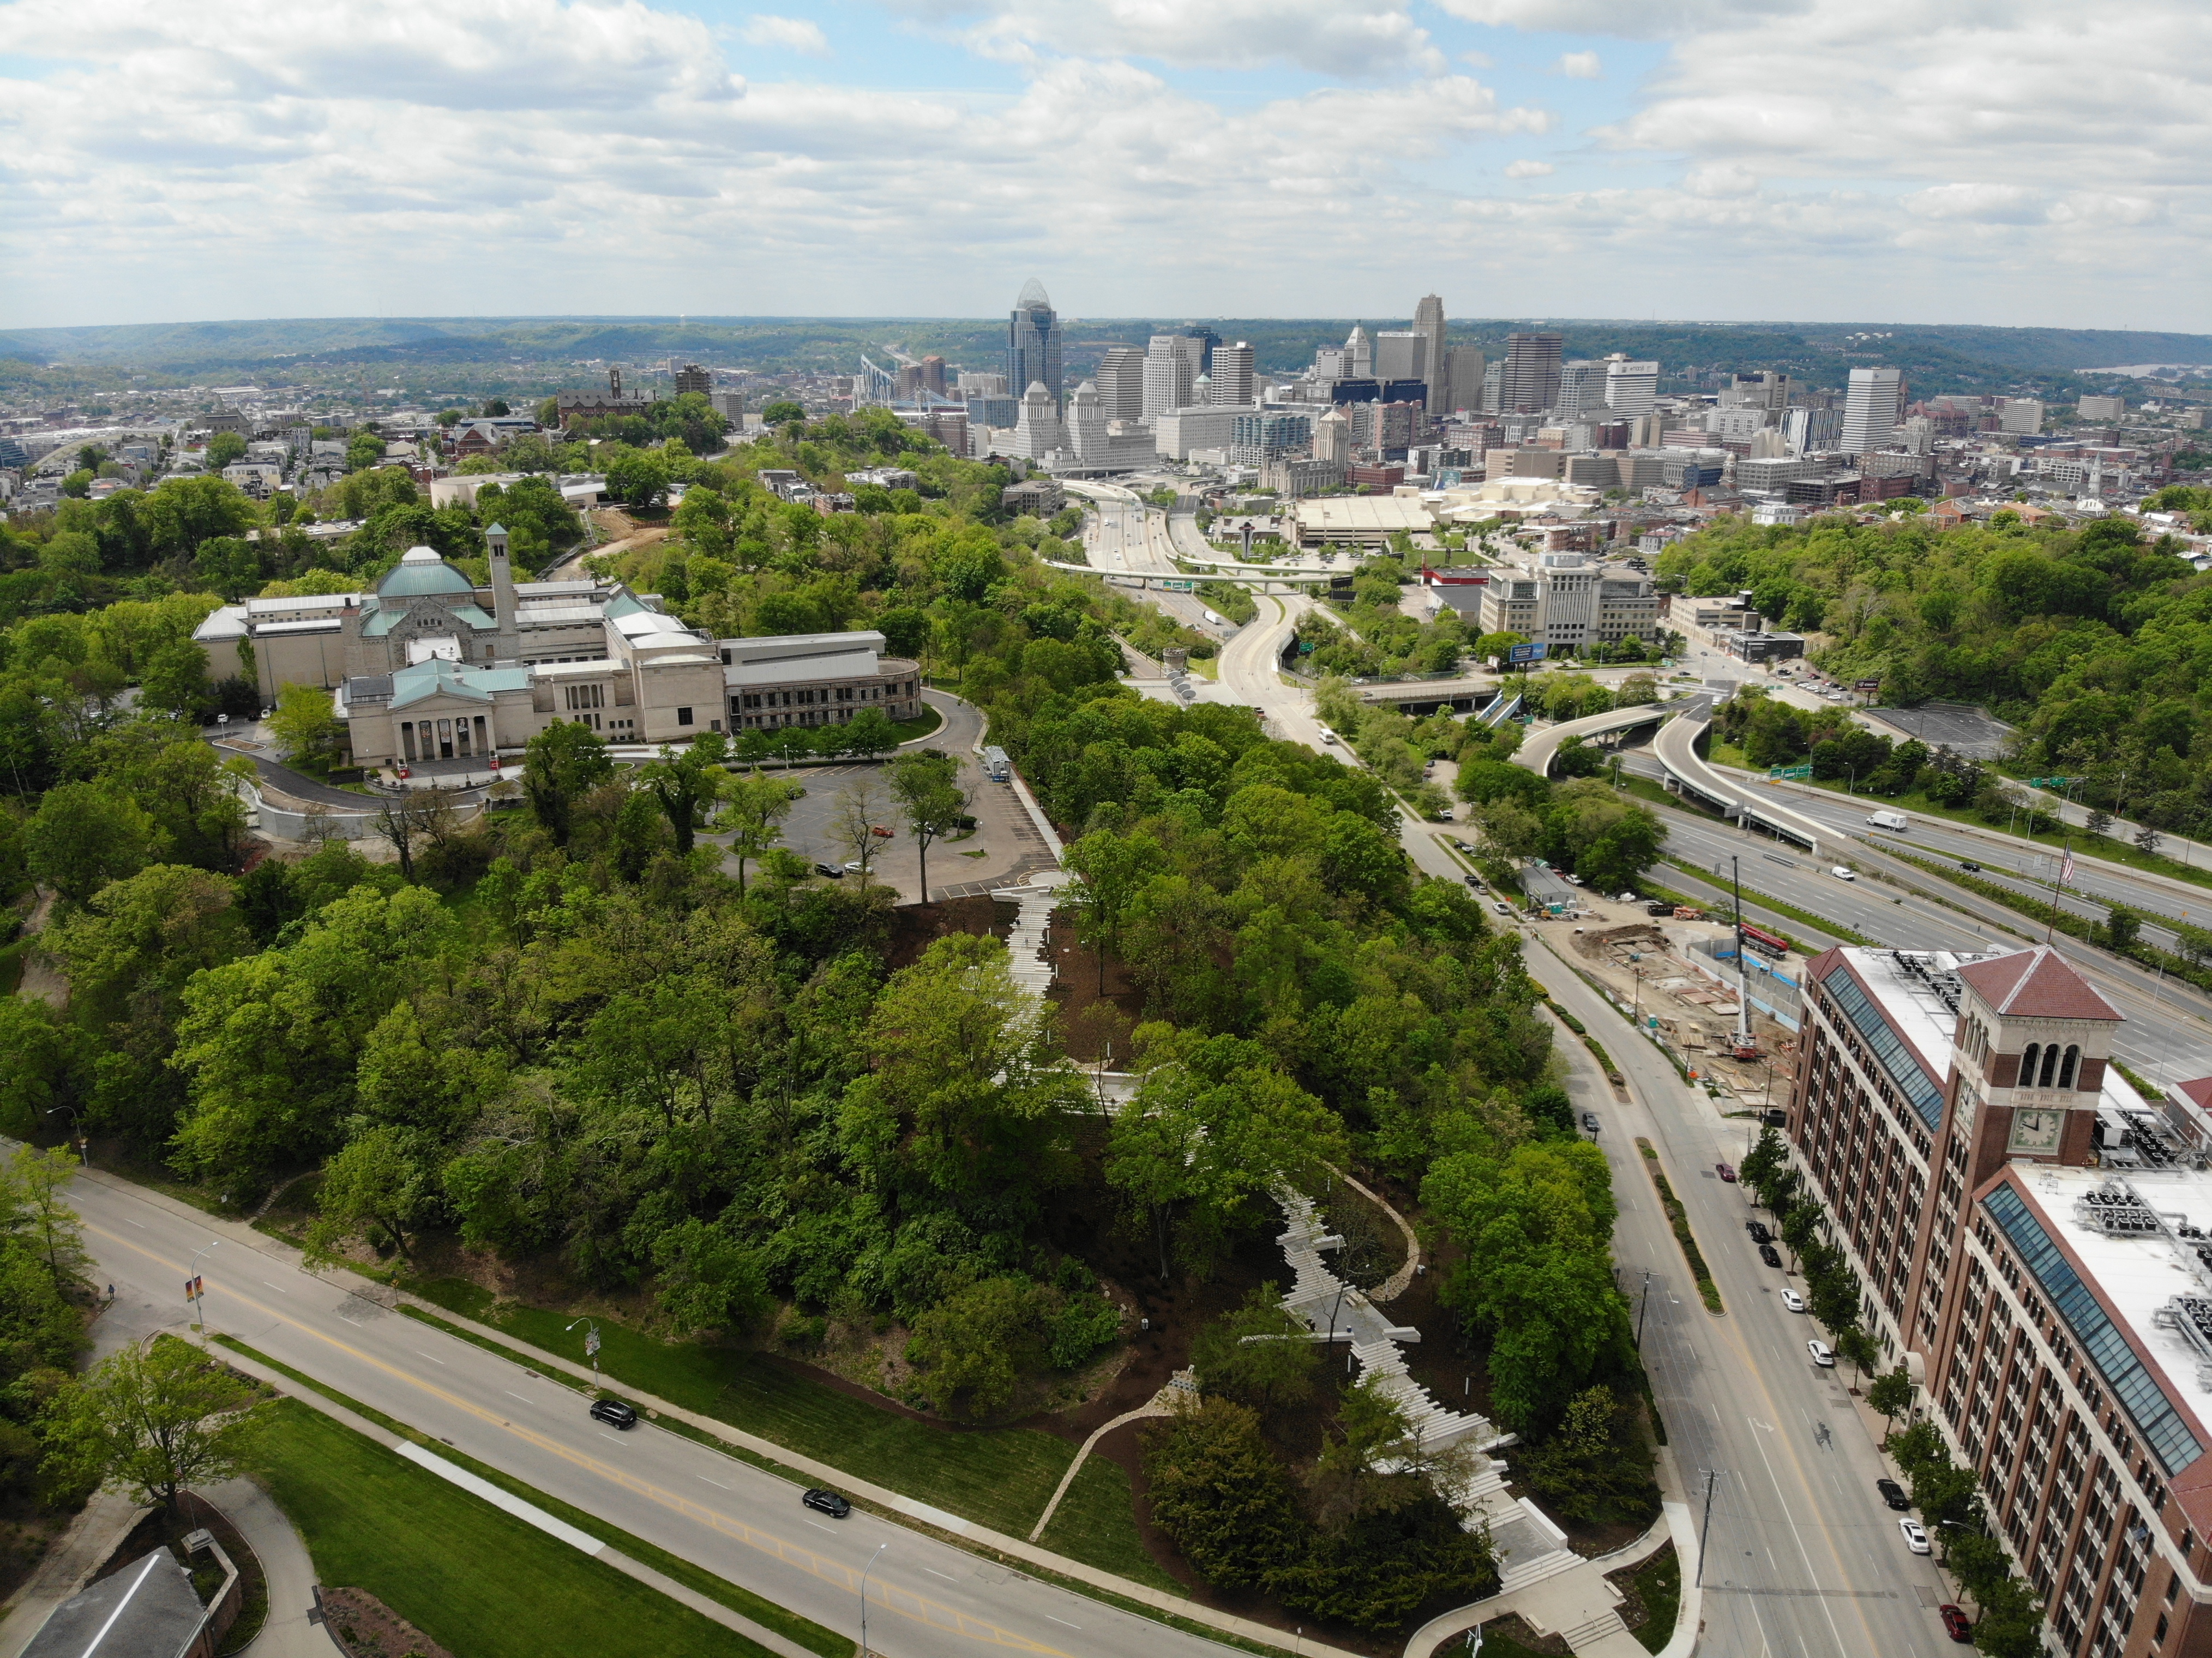 skyline view of Cincinnati with the Cincinnati Art Museum in the foreground